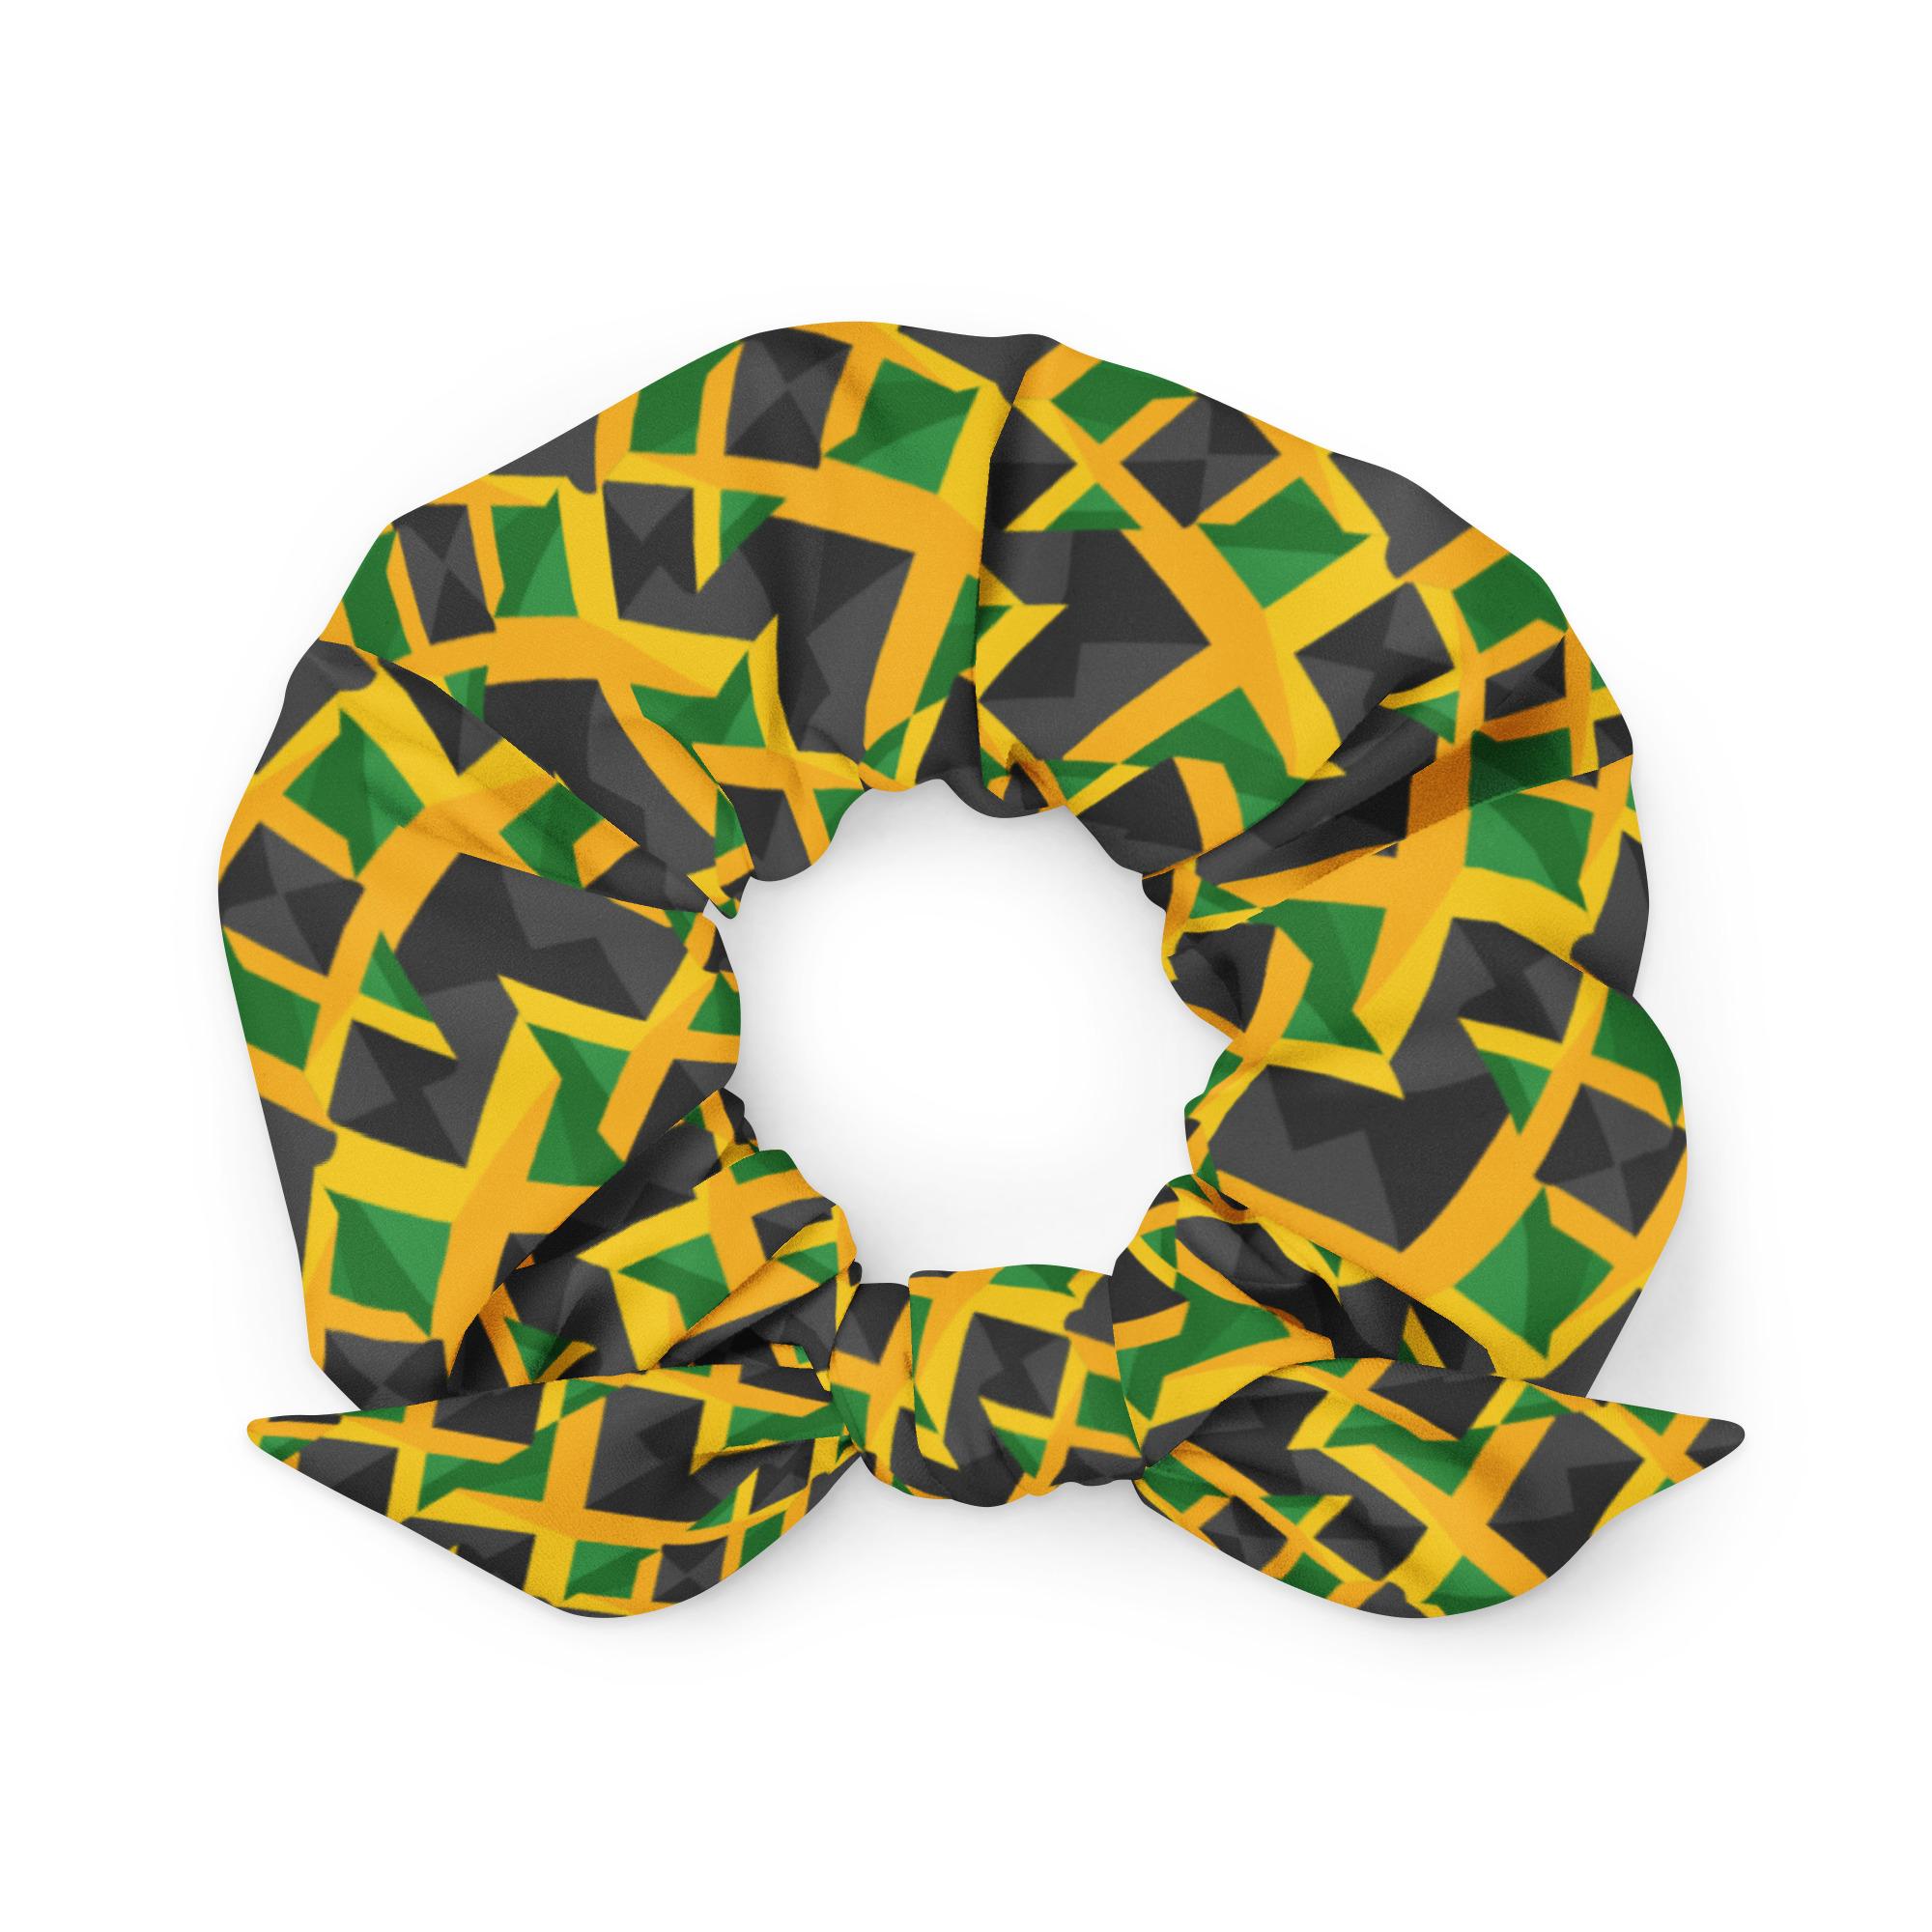 Negozio di cravatte per capelli Scrunchie in stile giamaicano Reggae Roots